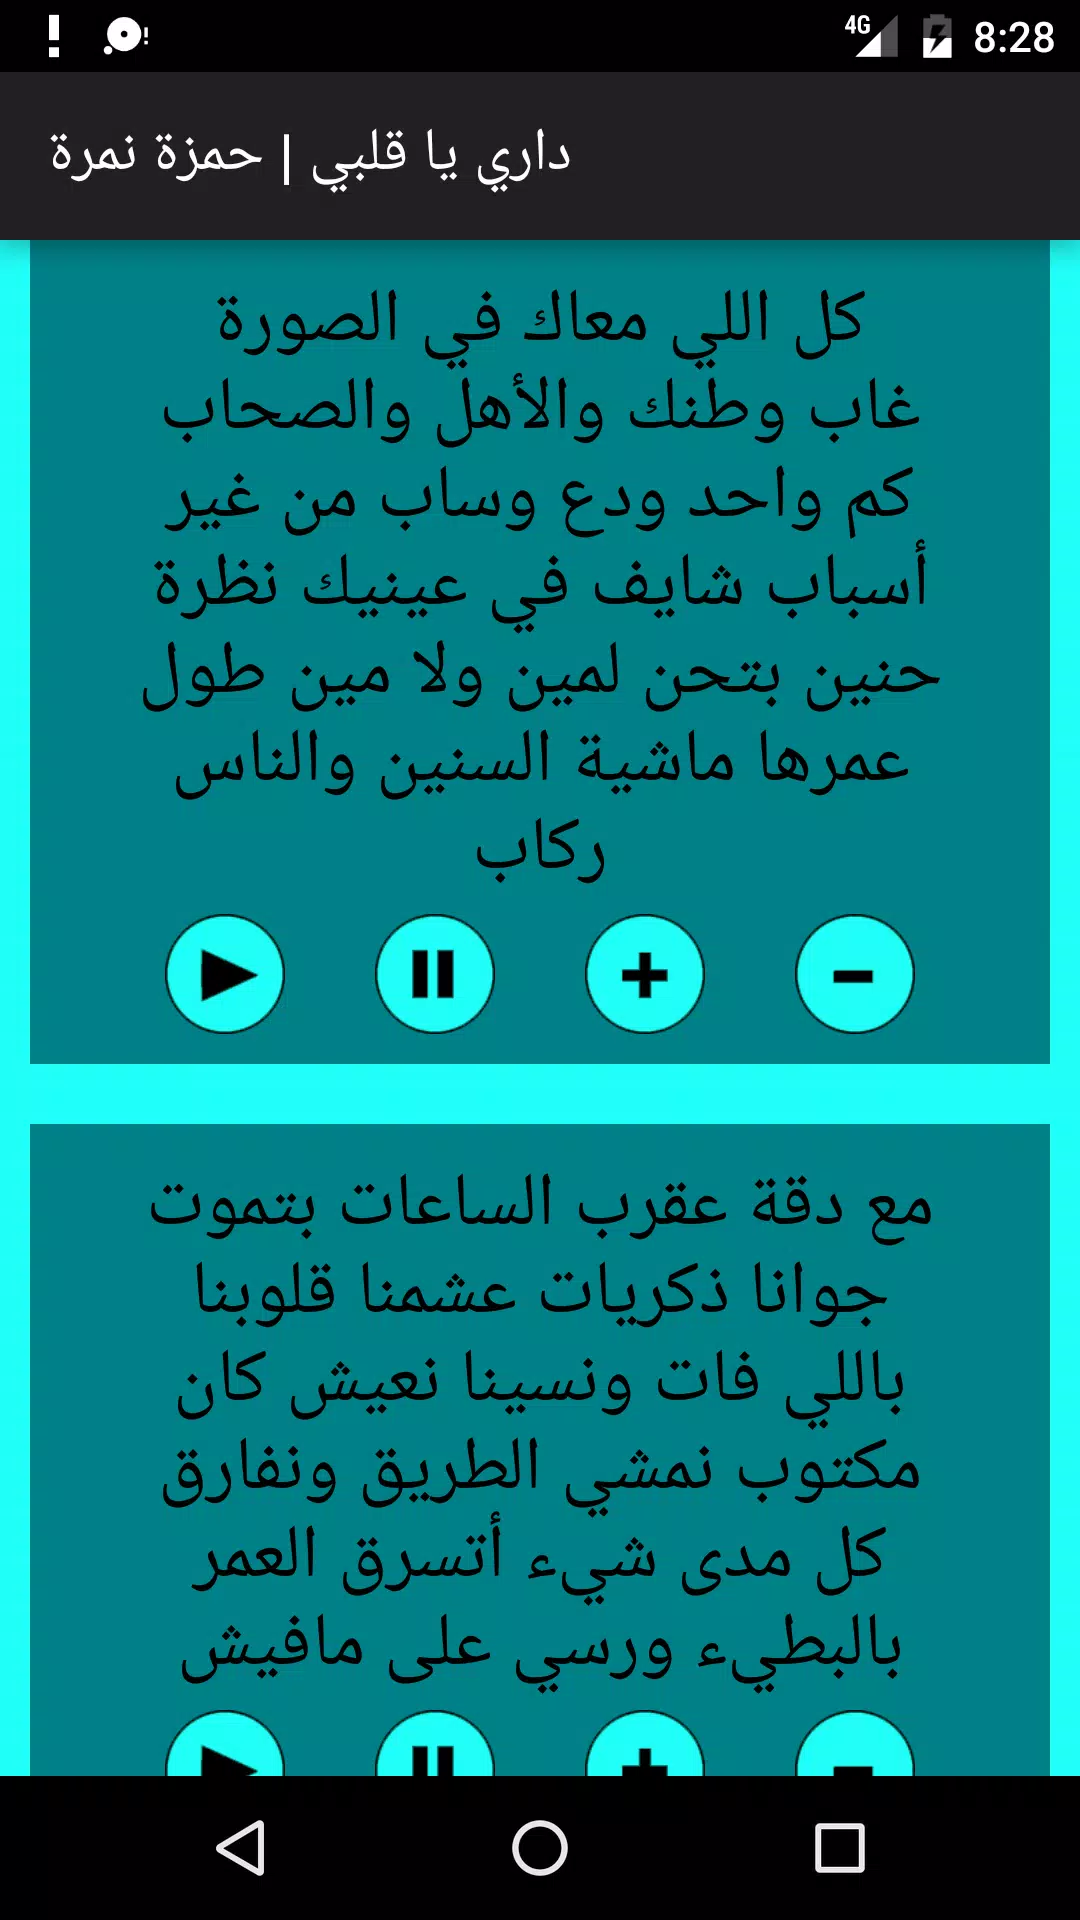 داري يا قلبي | حمزة نمرة (صوت وكلمات) APK for Android Download